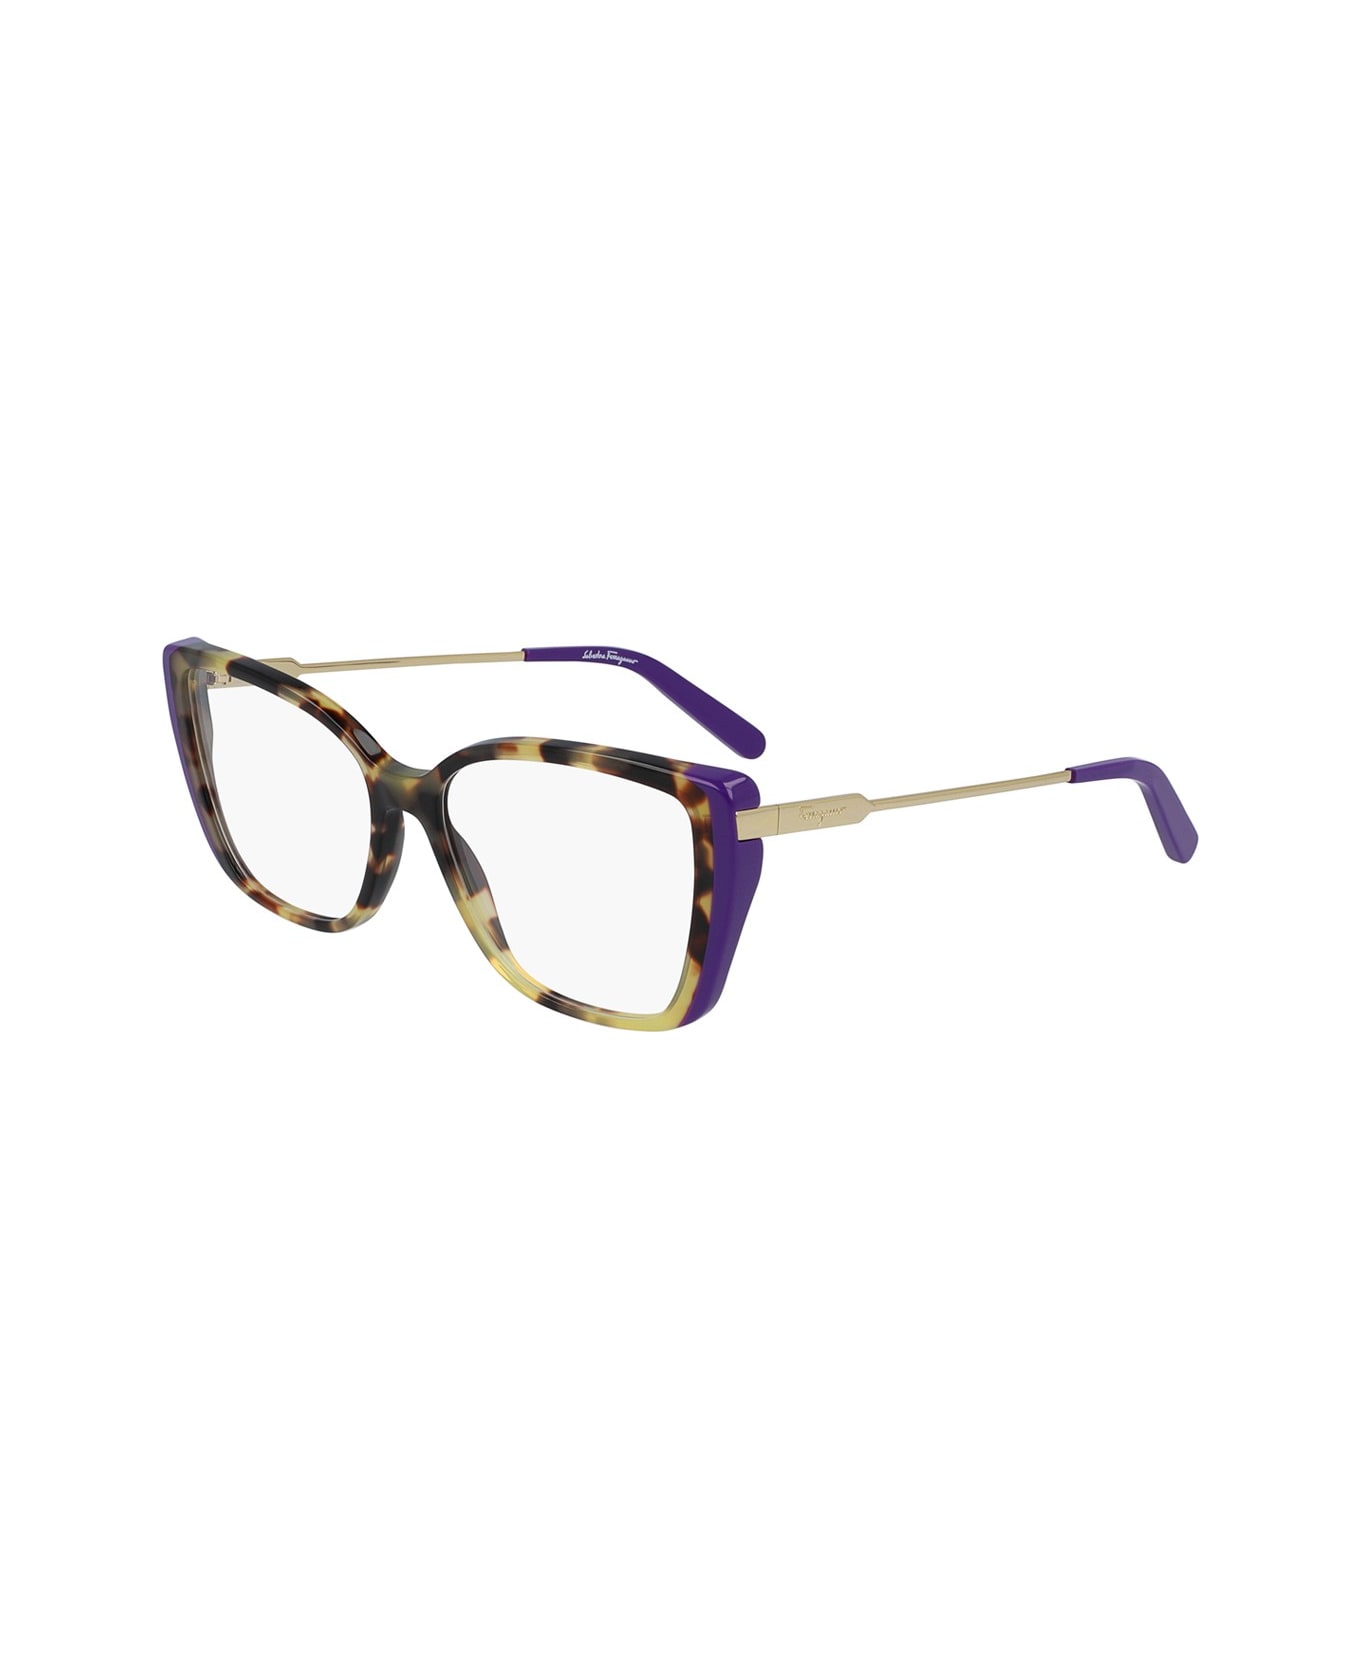 Salvatore Ferragamo Eyewear Sf2850 Glasses - Viola アイウェア